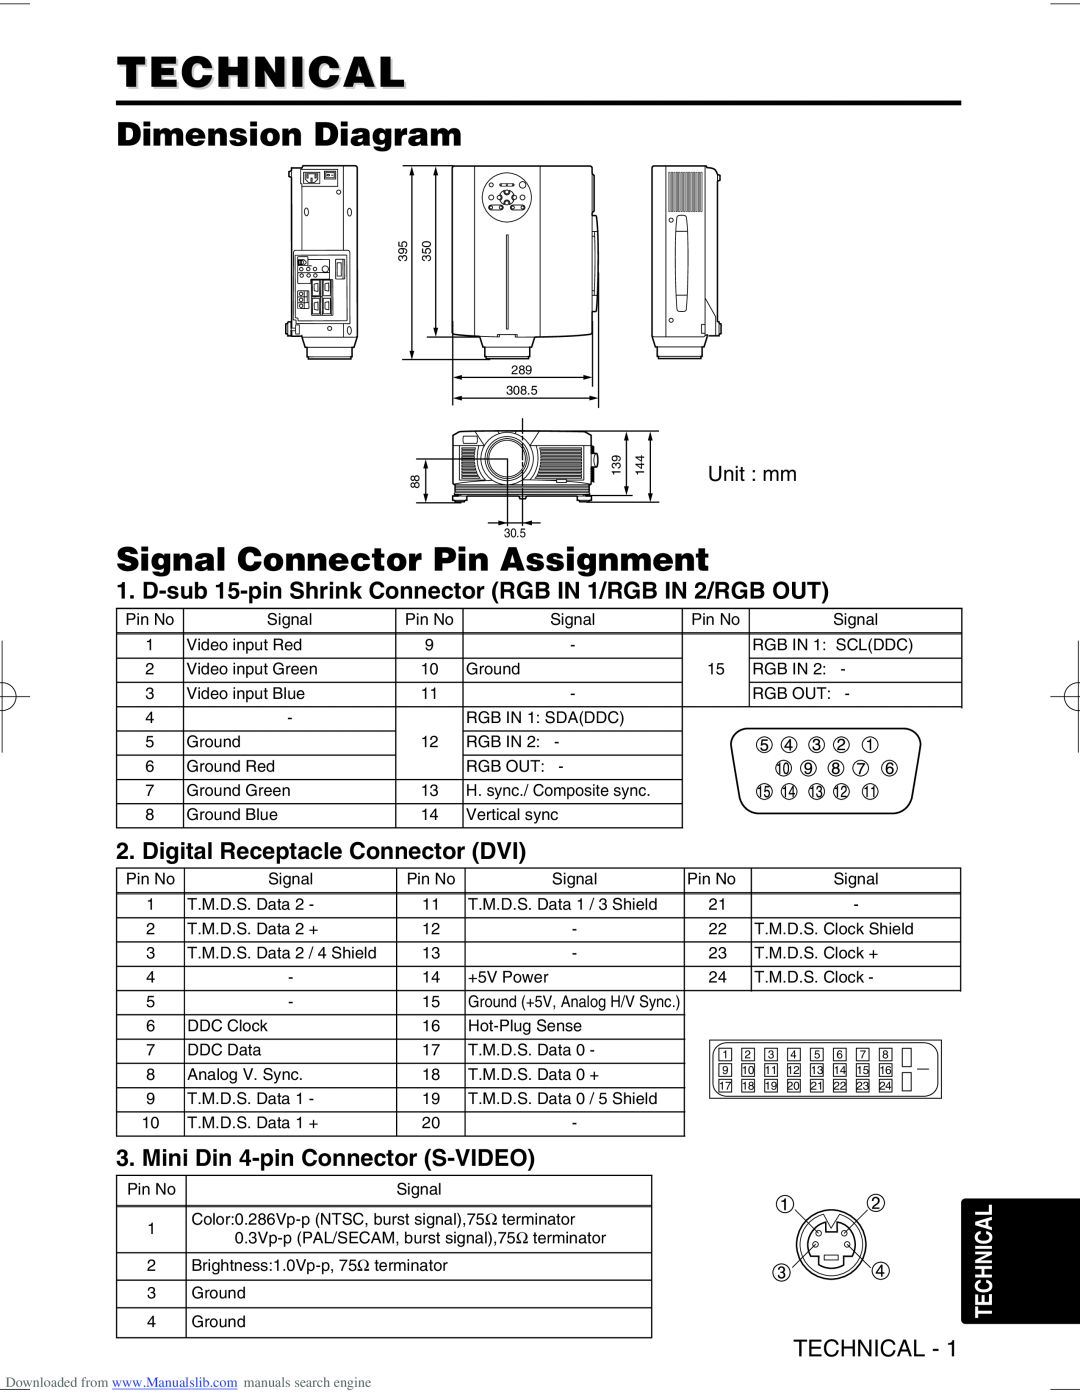 Hitachi CP-X995W Technical, Dimension Diagram, Signal Connector Pin Assignment, Digital Receptacle Connector DVI 